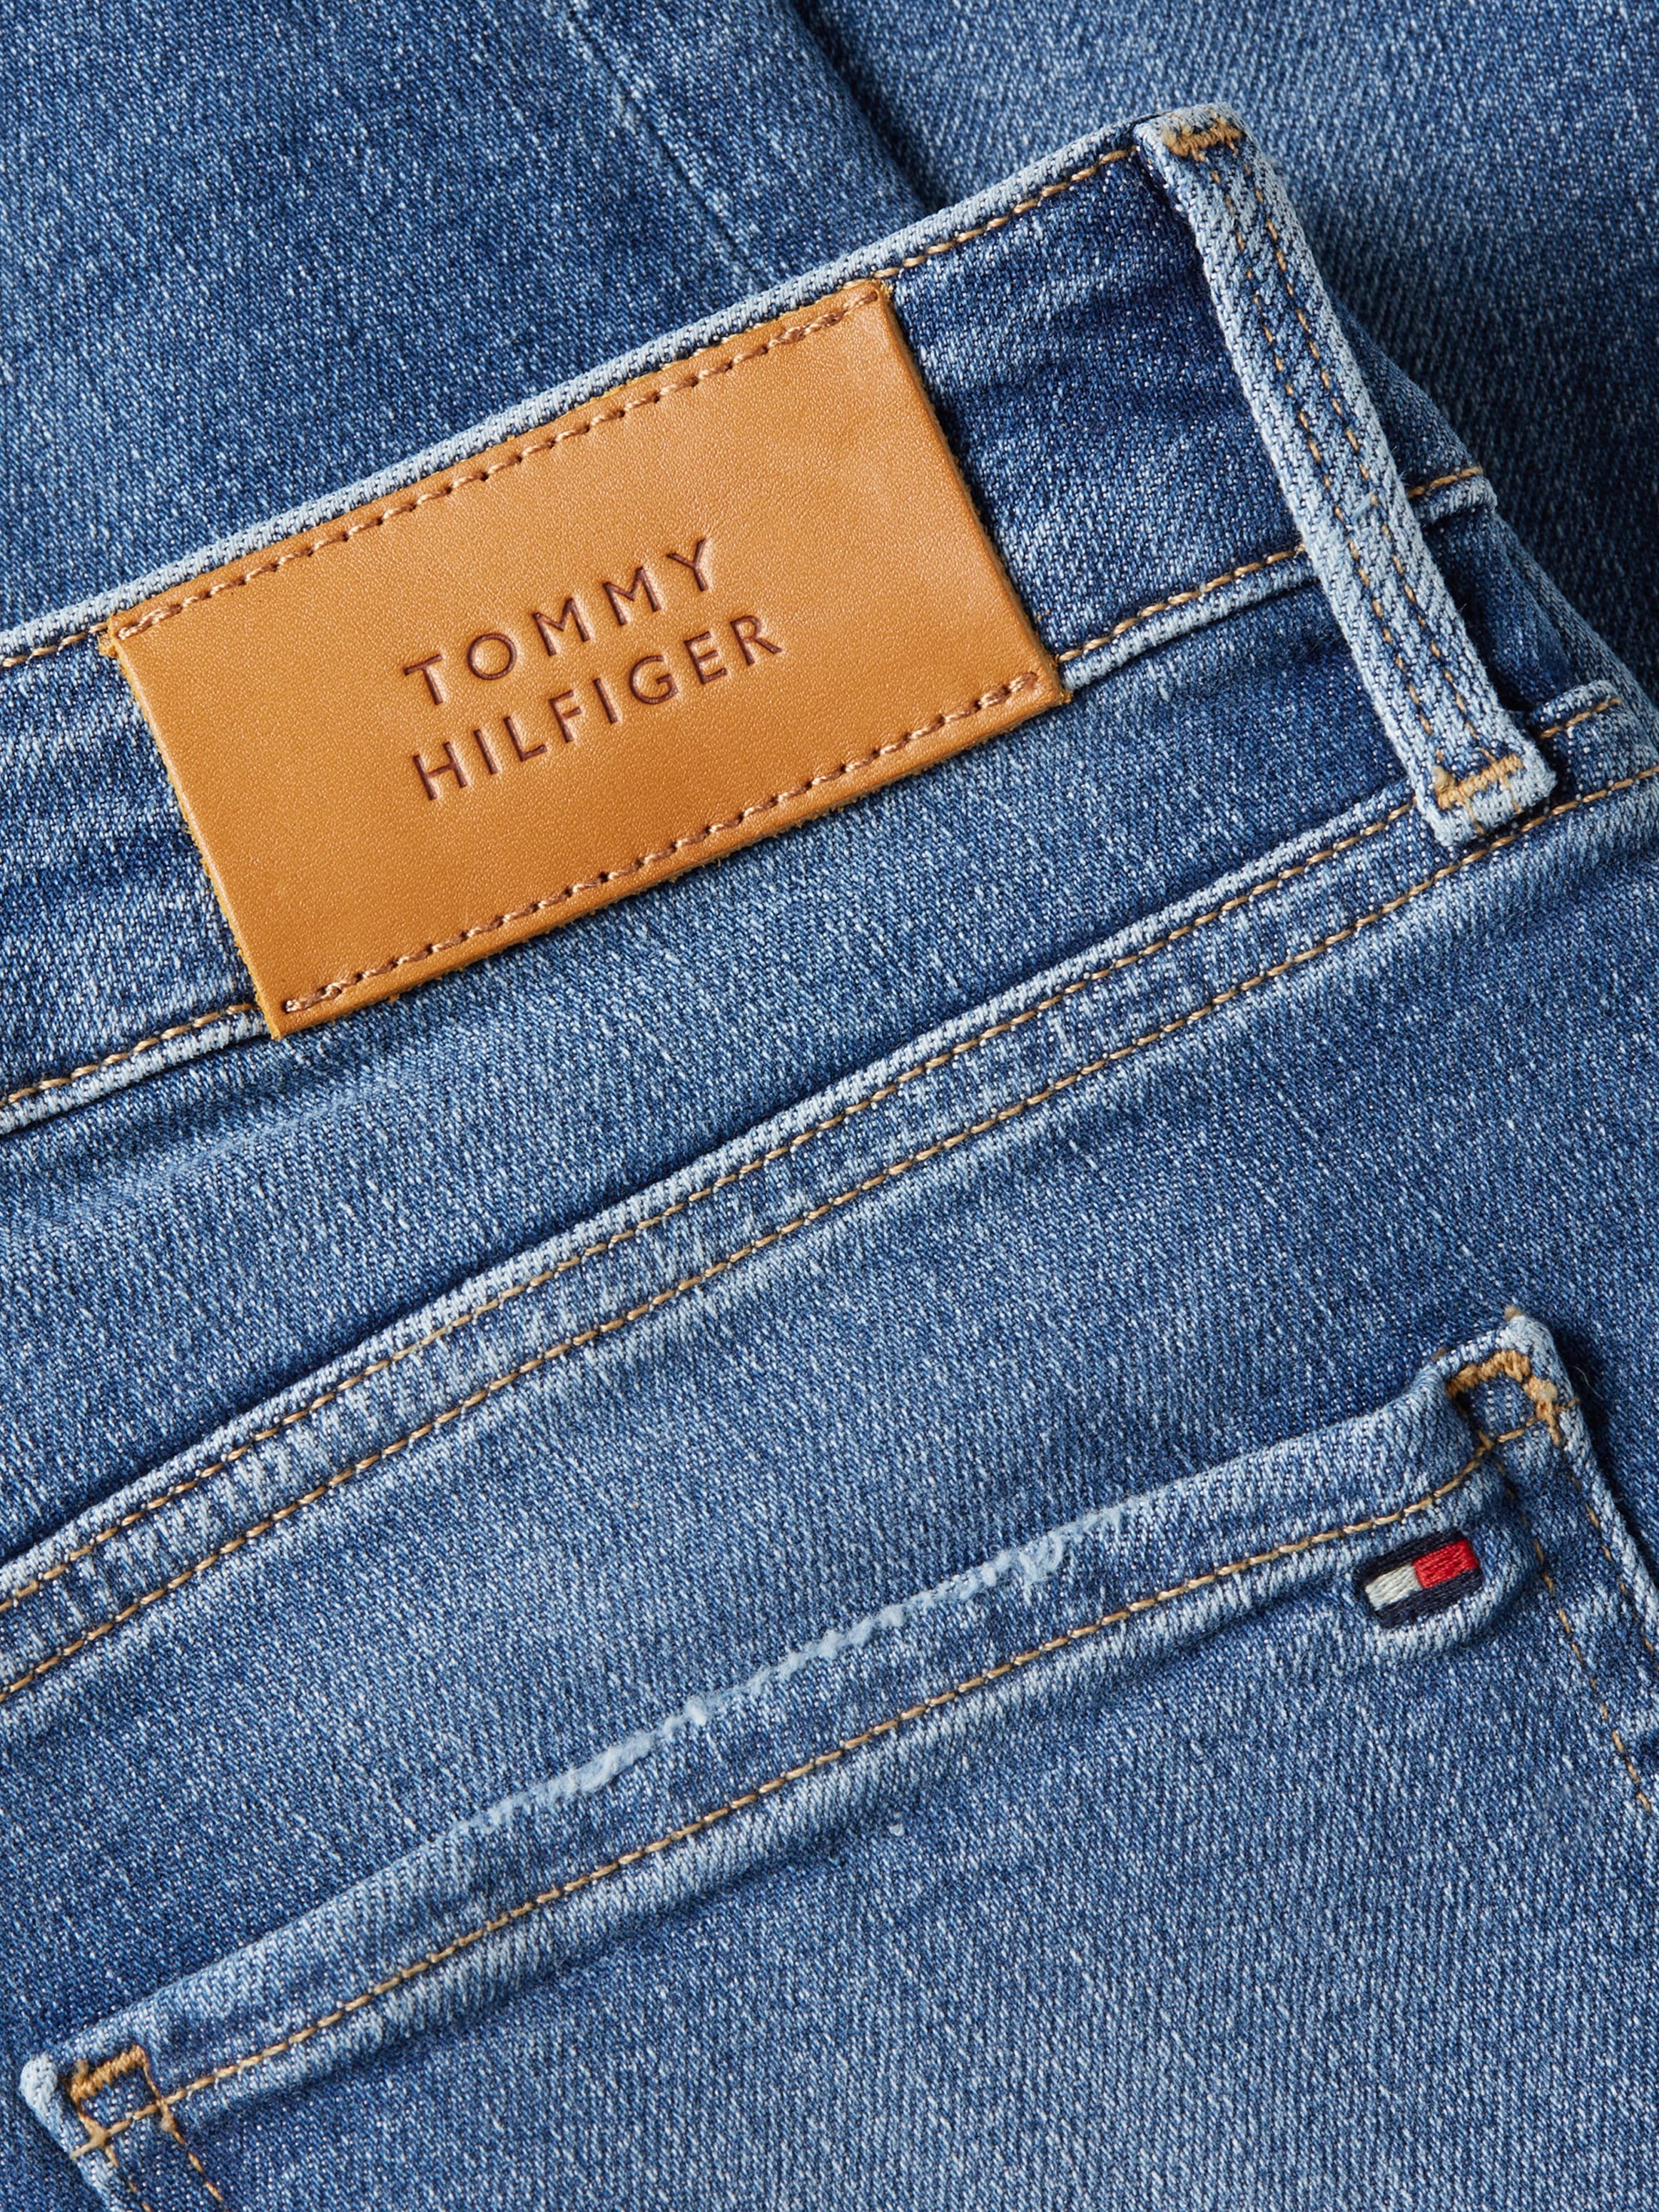 Tommy »TH ♕ HW«, Hilfiger Tommy HARLEM Hilfiger SKINNY bei FLEX mit Skinny-fit-Jeans Logo-Badge U